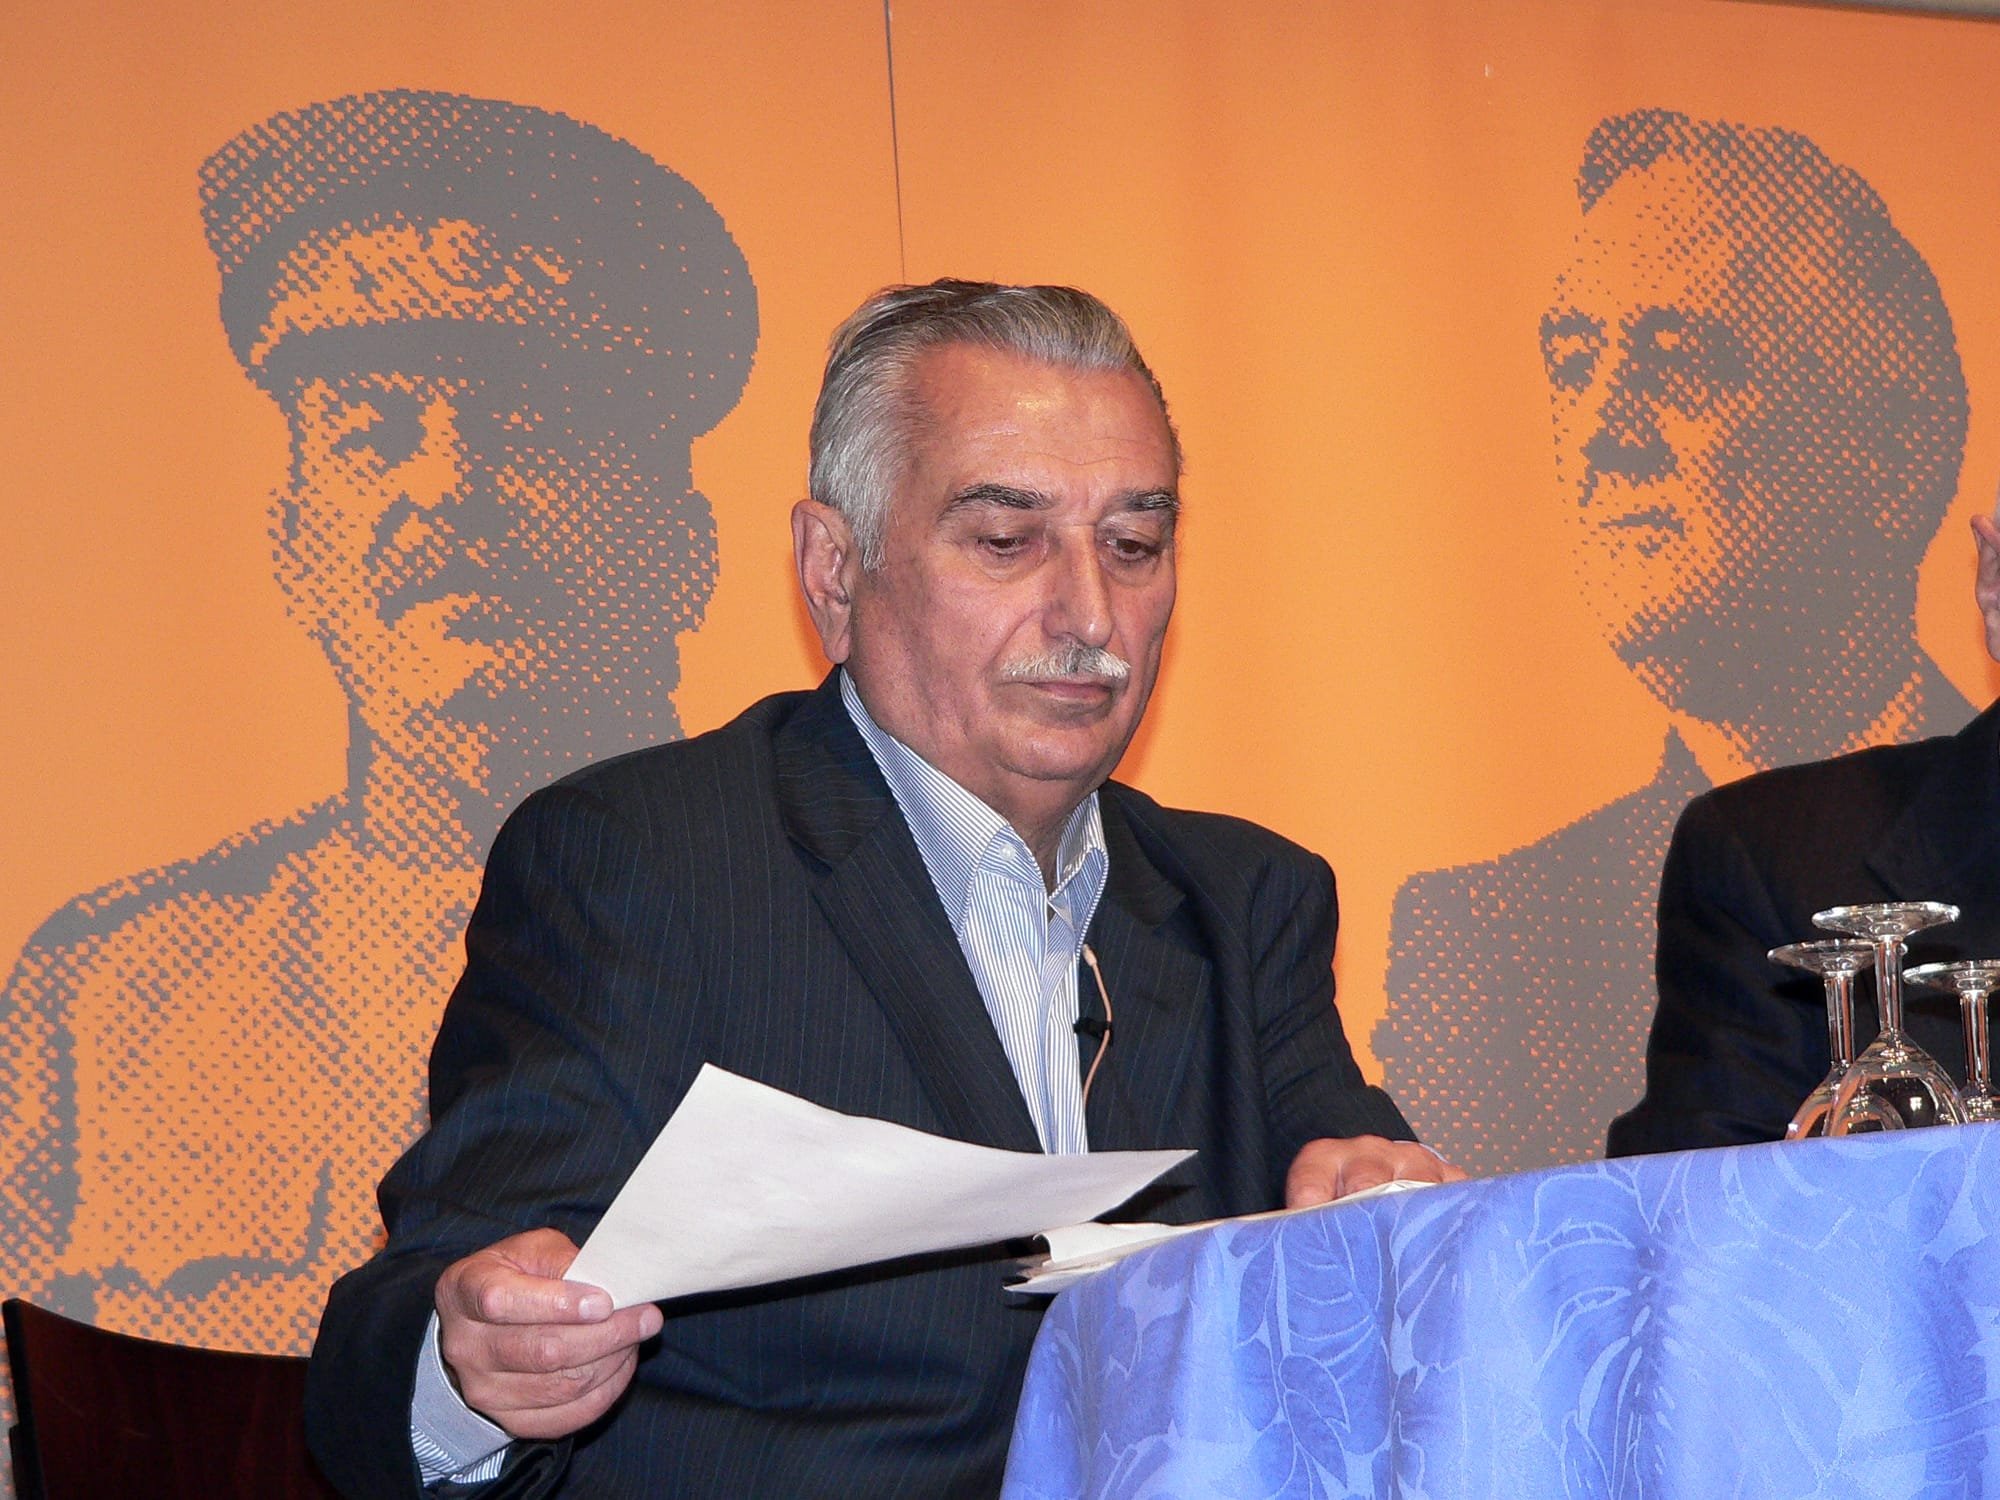 Мой отец Е.Я.Джугашвили.Конференция "Yalta and beyond" в г.Маастрихт.2005